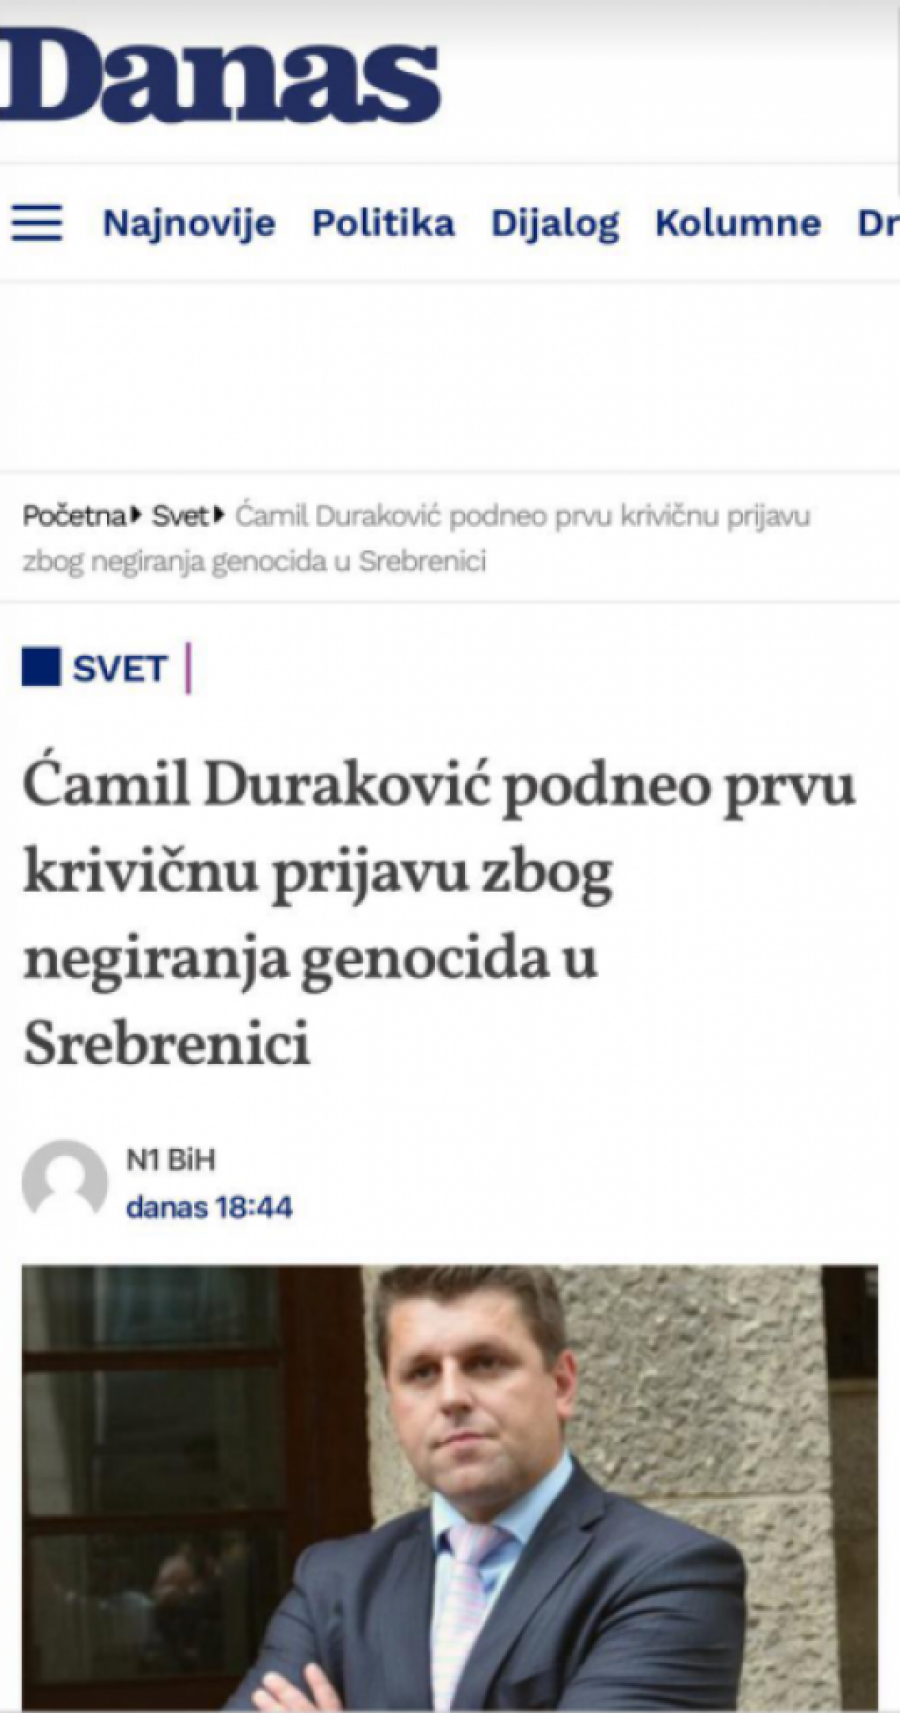 LICEMERJE BEZ PREMCA! Đilasovi mediji potpuno ravnodušni prema nasilju nad novinarima u BiH!